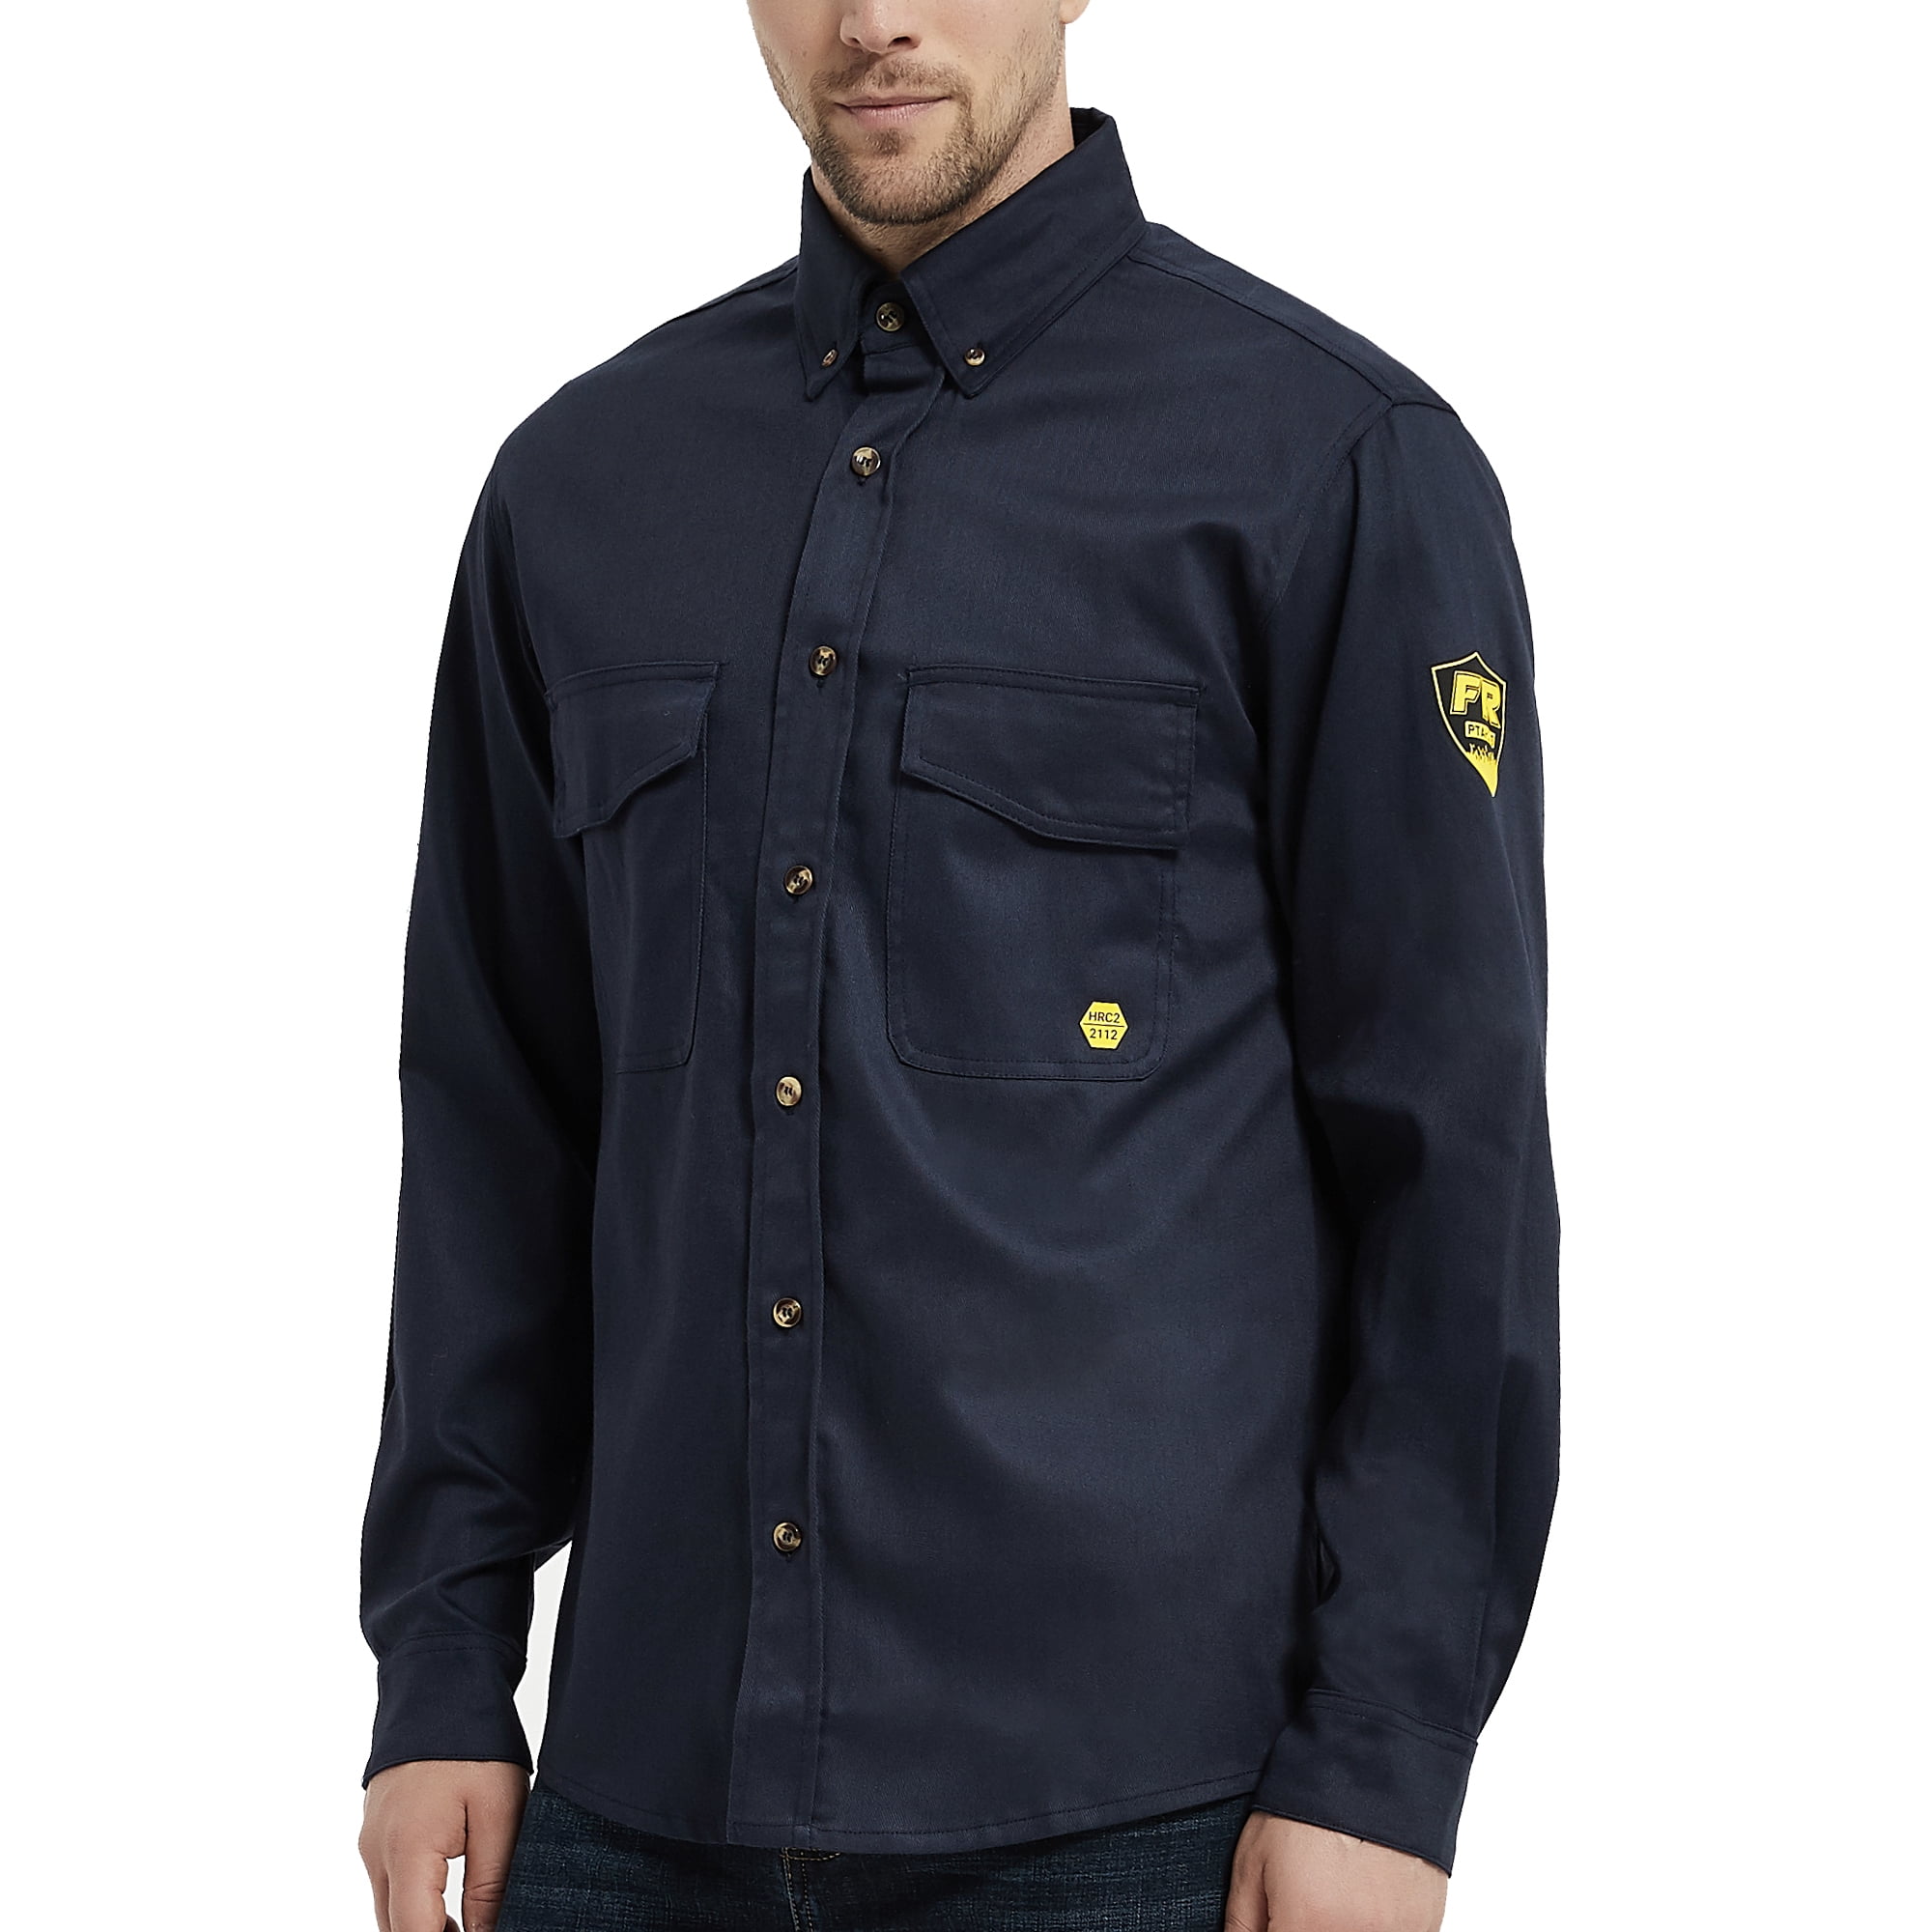 BOCOMAL FR Shirts Flame Resistant Shirt 100% Cotton NFPA2112 7.5oz Men's Fire Retardant Welding Shirt 